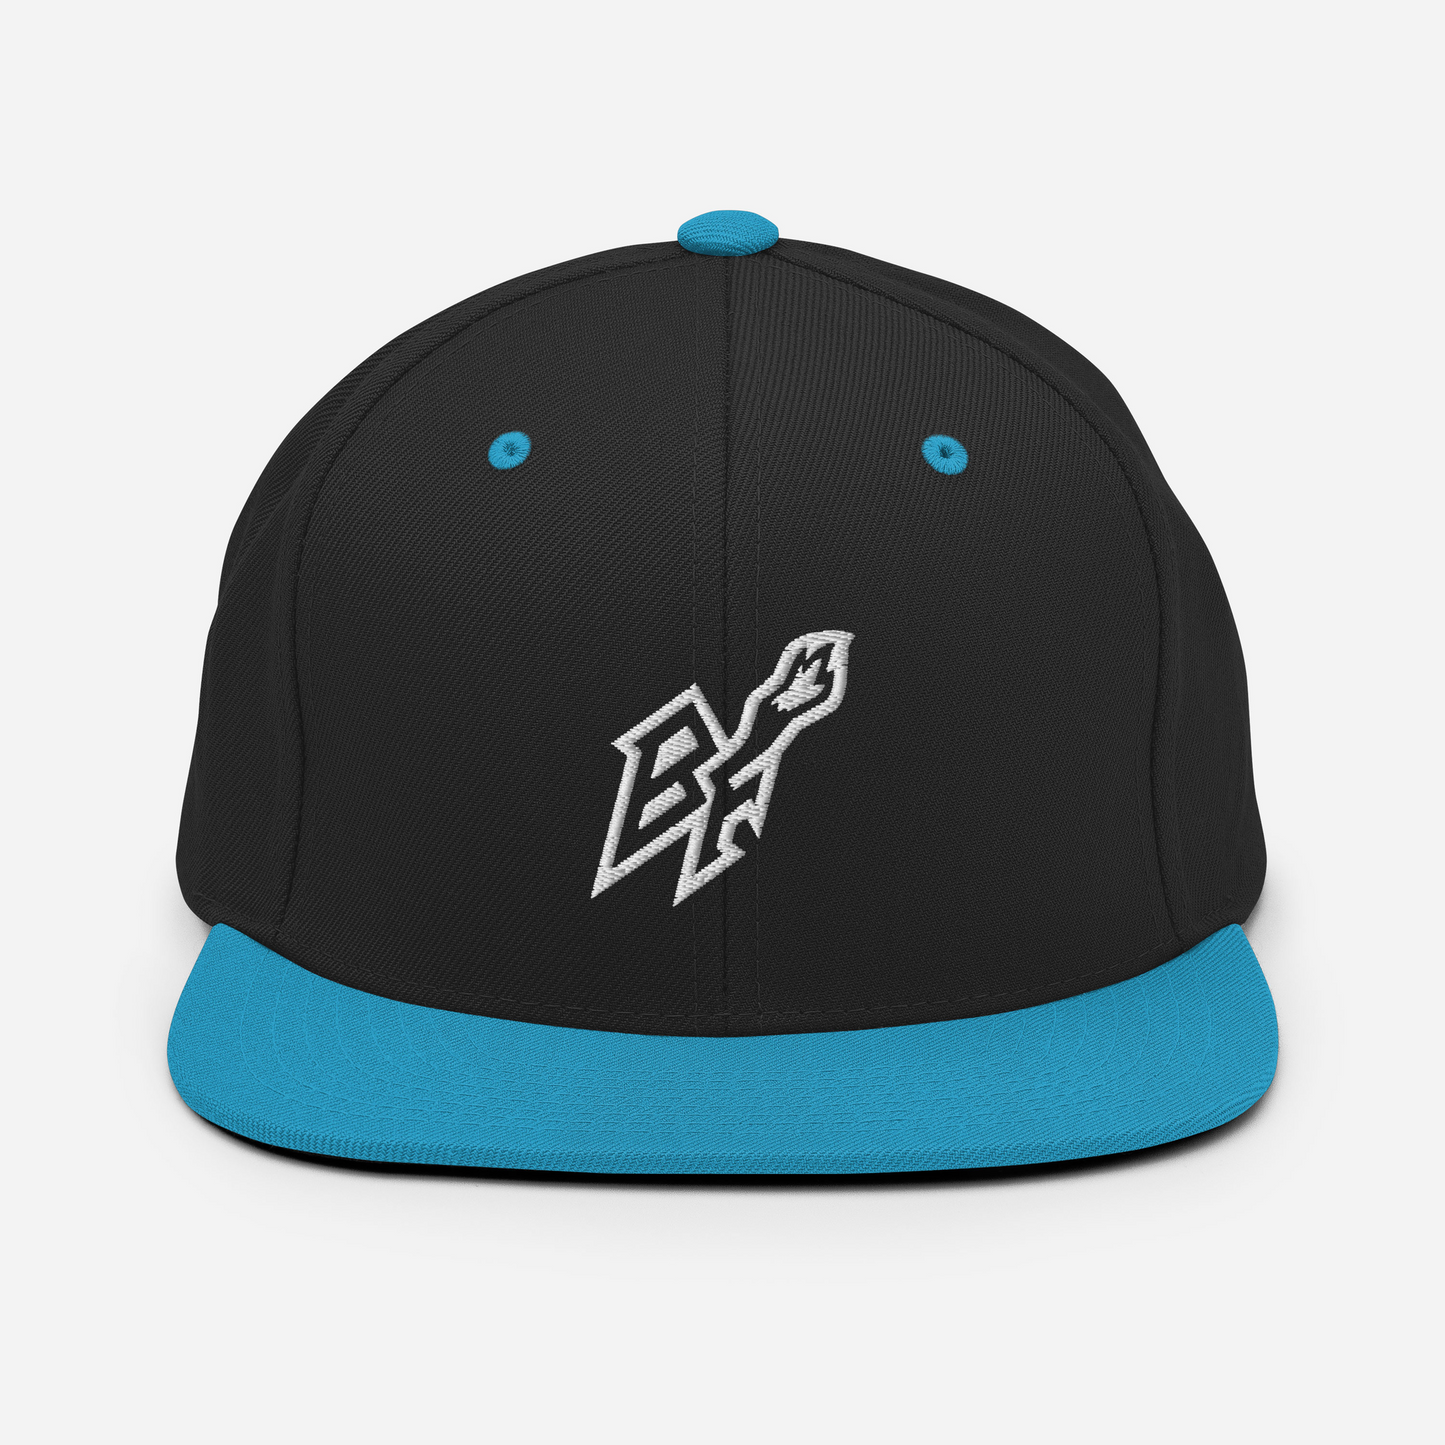 BlackFox Snapback Hat